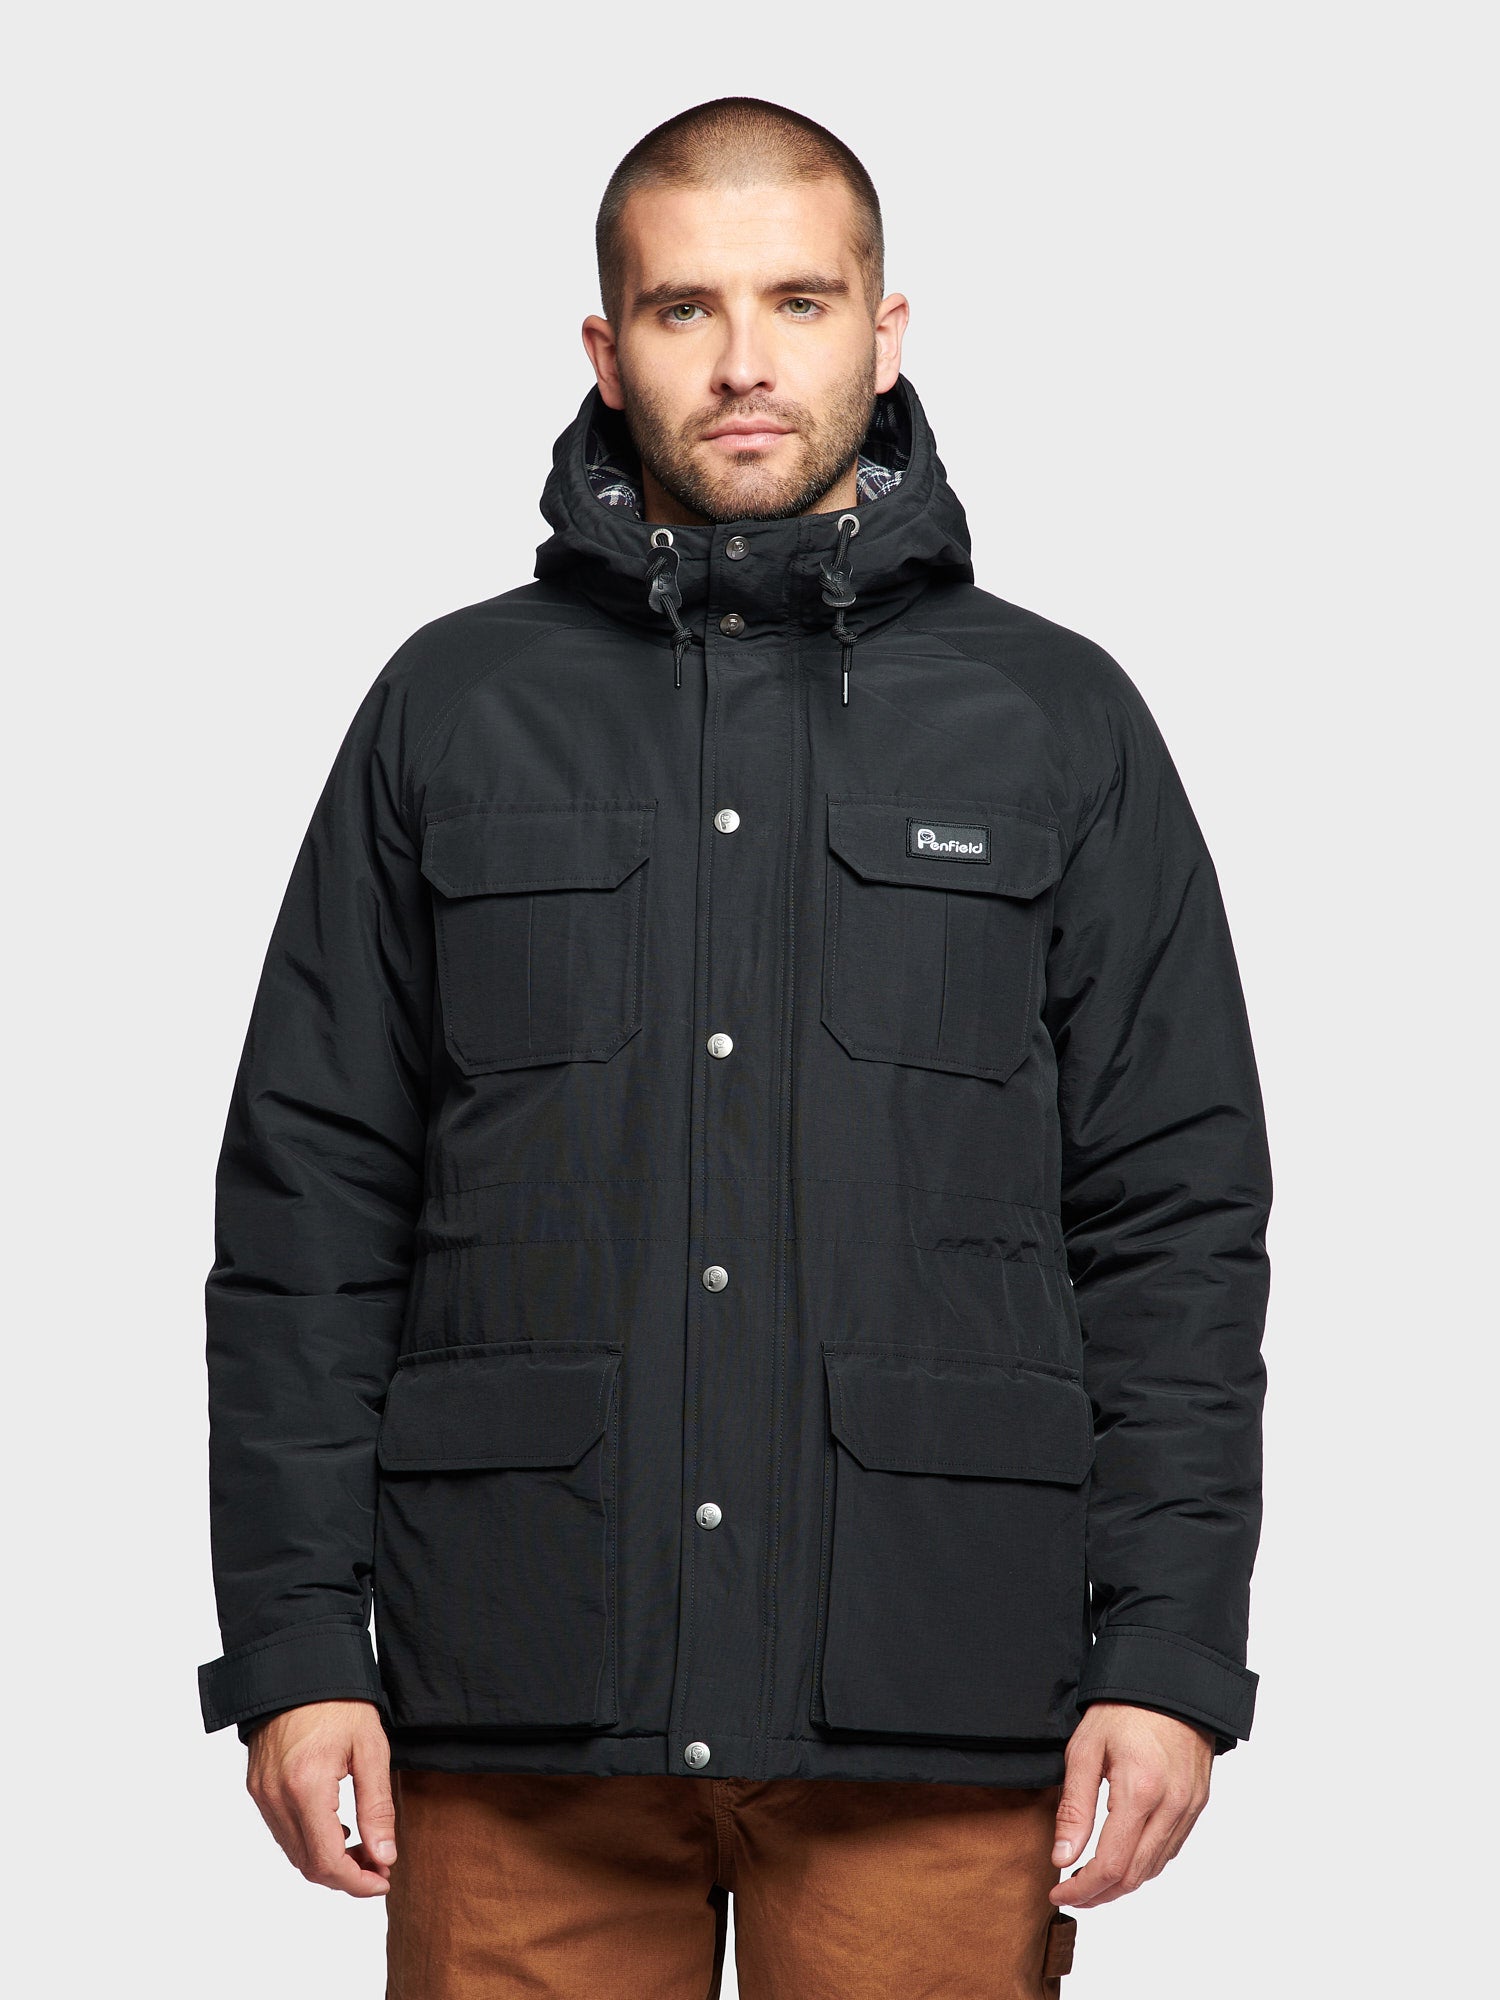 Kasson Jacket in Black – Penfield